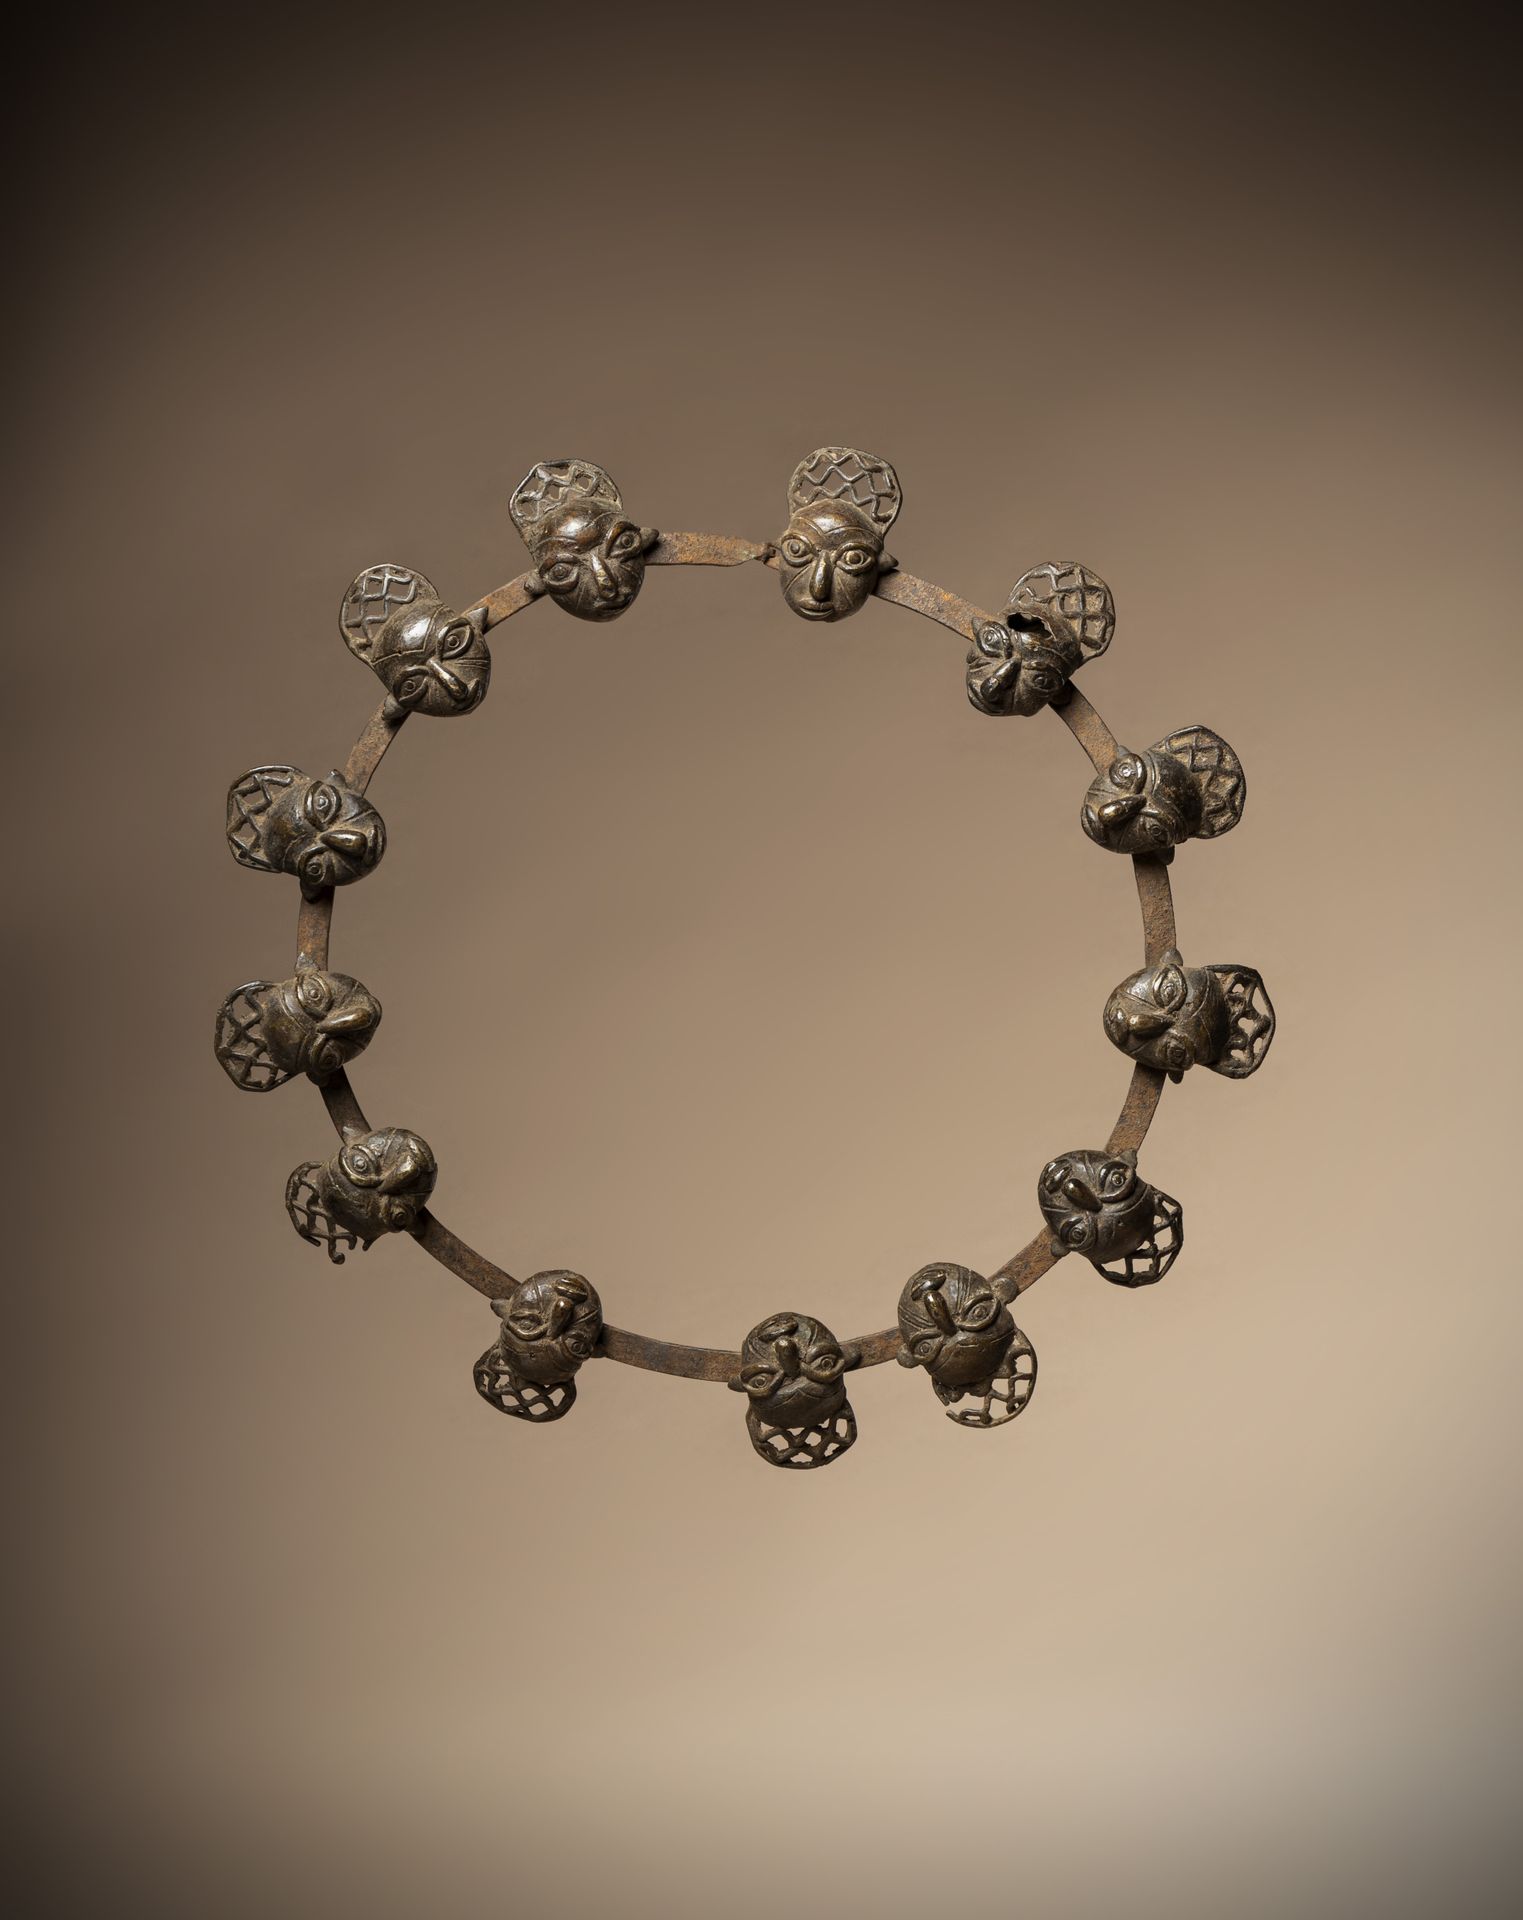 Null BAMILEKE (喀麦隆)

王国的大参谋所戴的礼仪性项链。

我们的例子有13个代表 "方 "的头像，安装在一个扁平的铁环上。

这种项链被称为 &hellip;